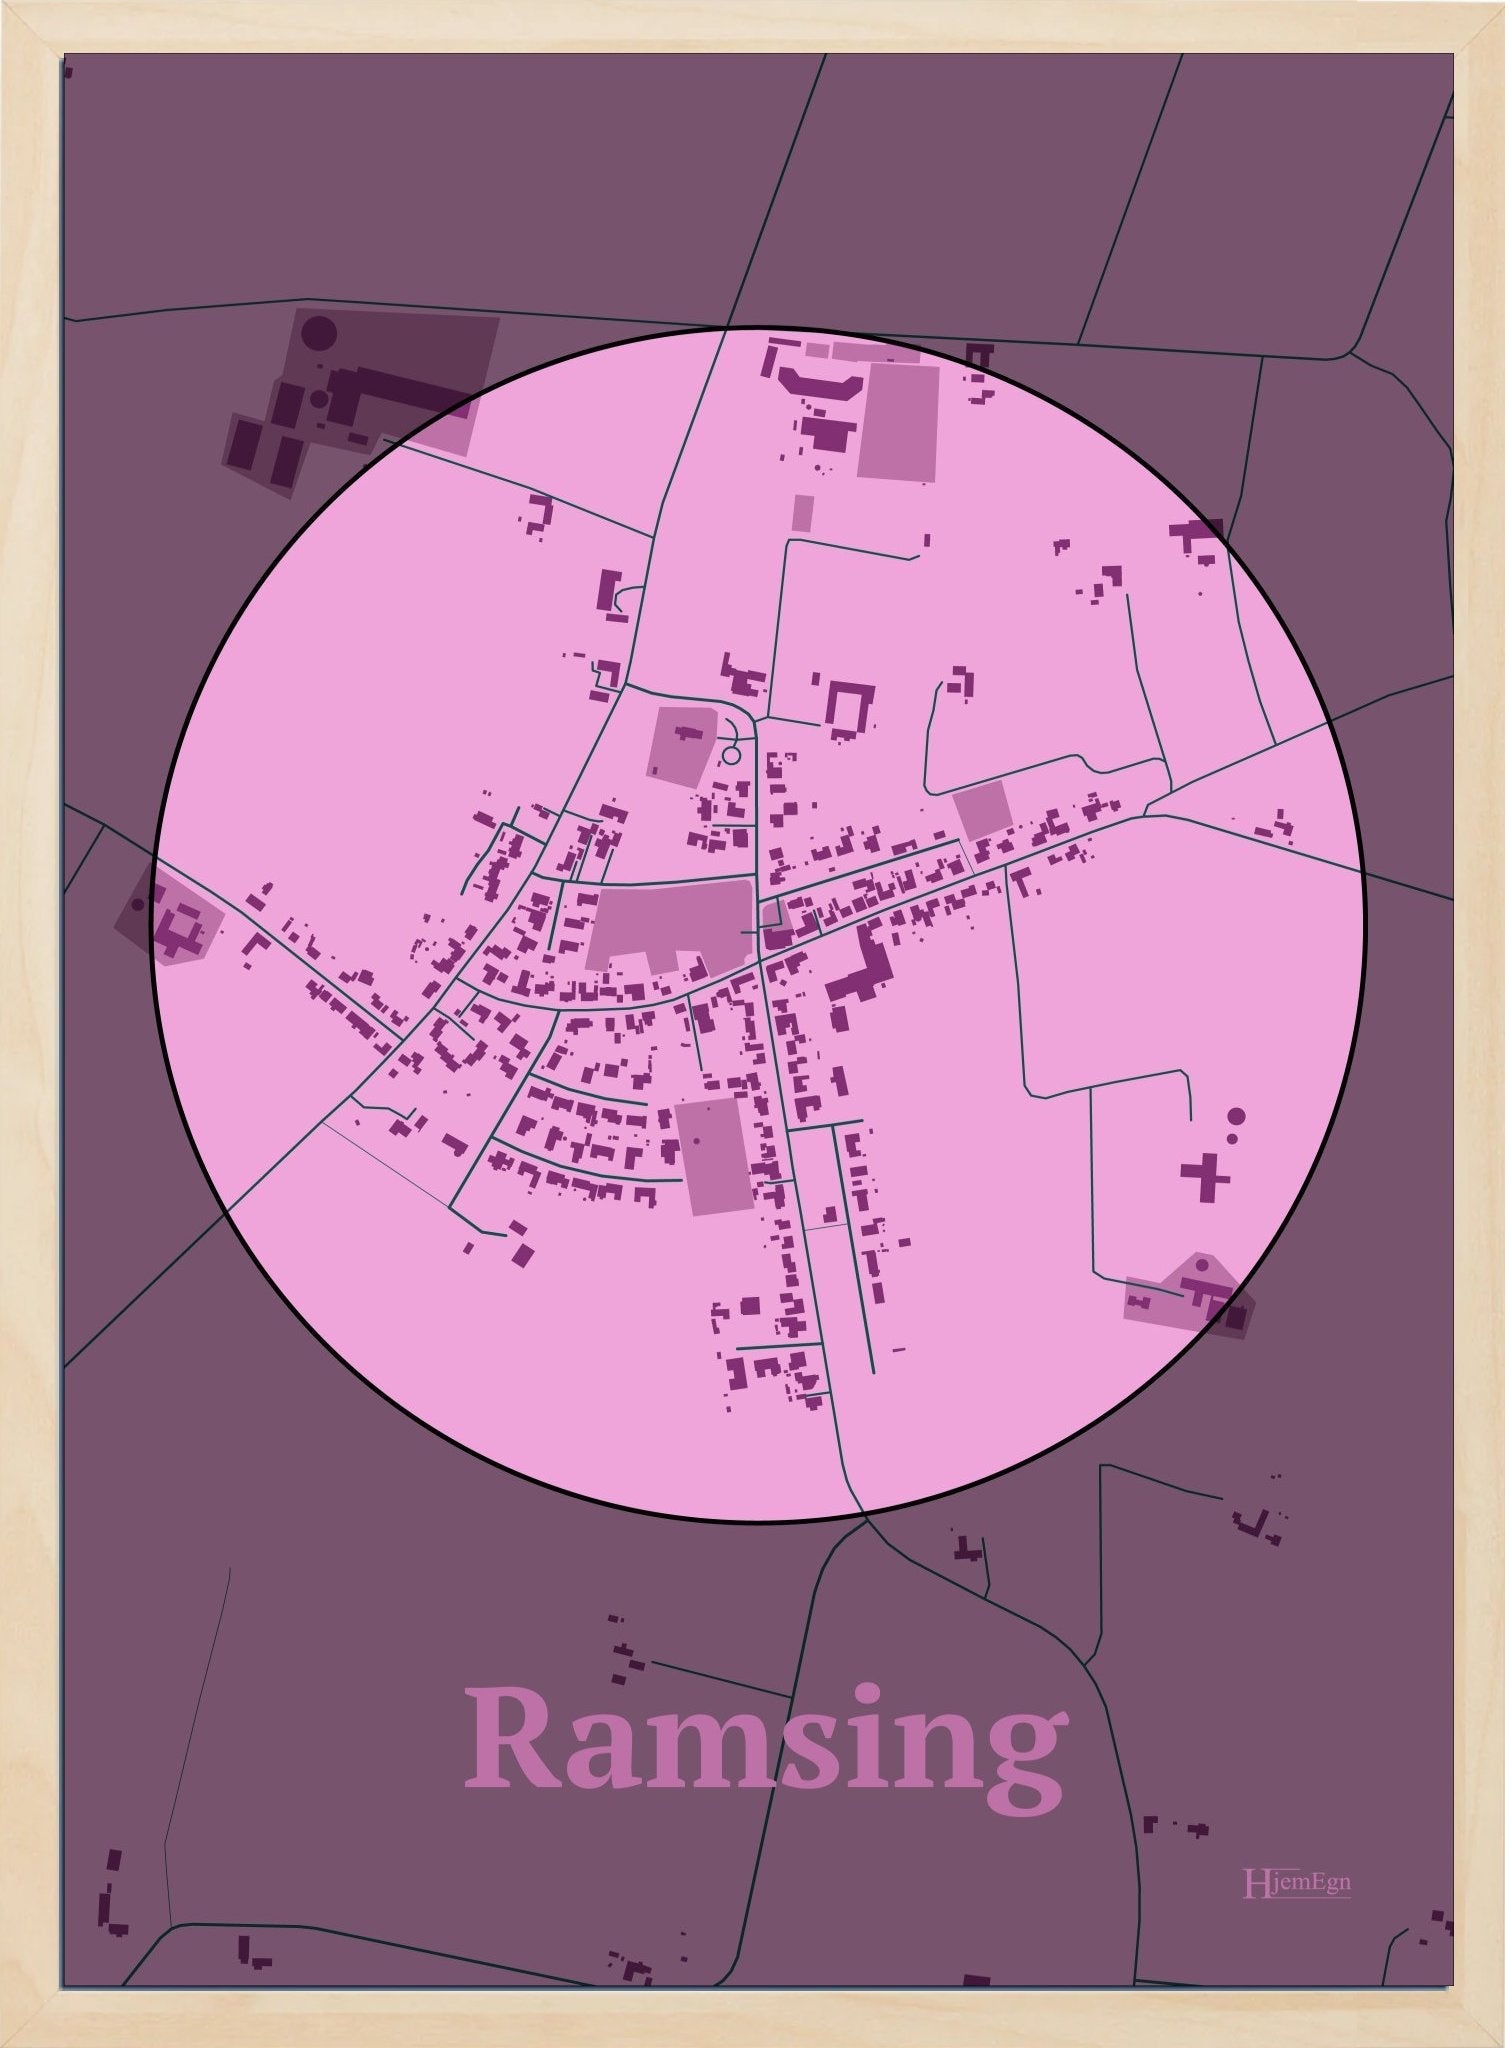 Ramsing plakat i farve pastel rød og HjemEgn.dk design centrum. Design bykort for Ramsing